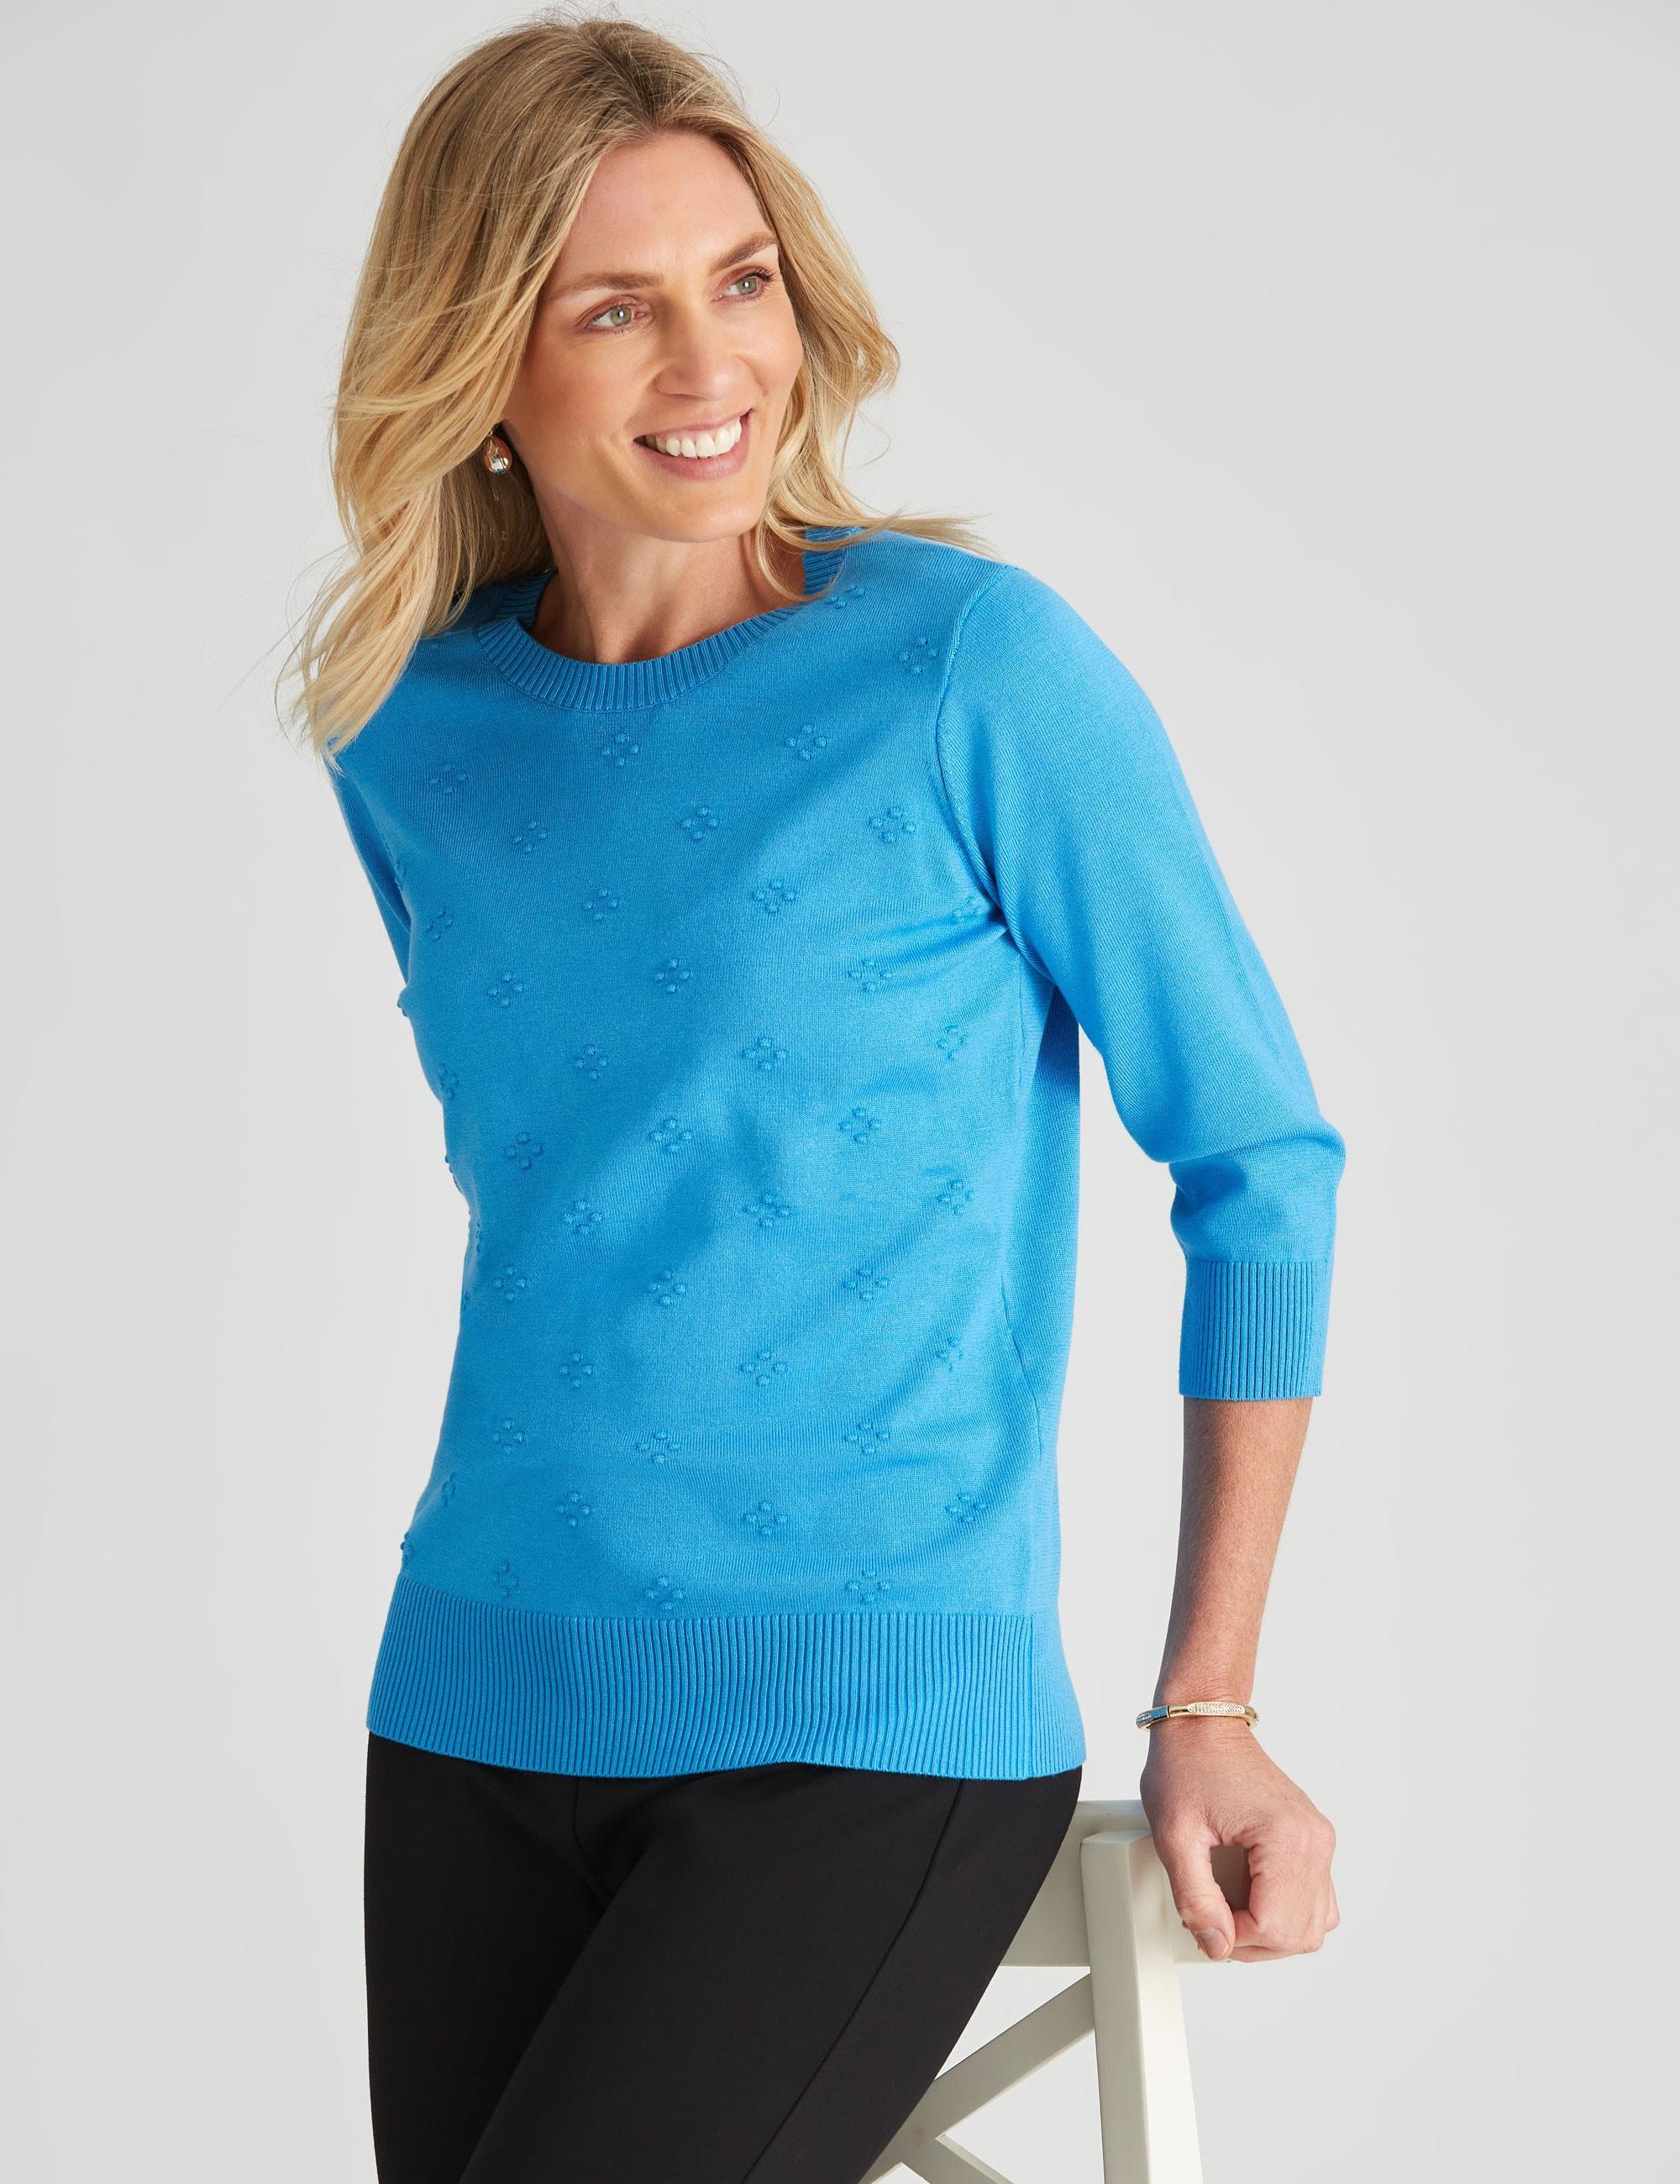 NONI B - Womens Jumper - Regular Winter Sweater - Blue Pullover - Textured - Knitwear - 3/4 Sleeve - Malibu Blue - Crew Neck - Warm Work Clothing